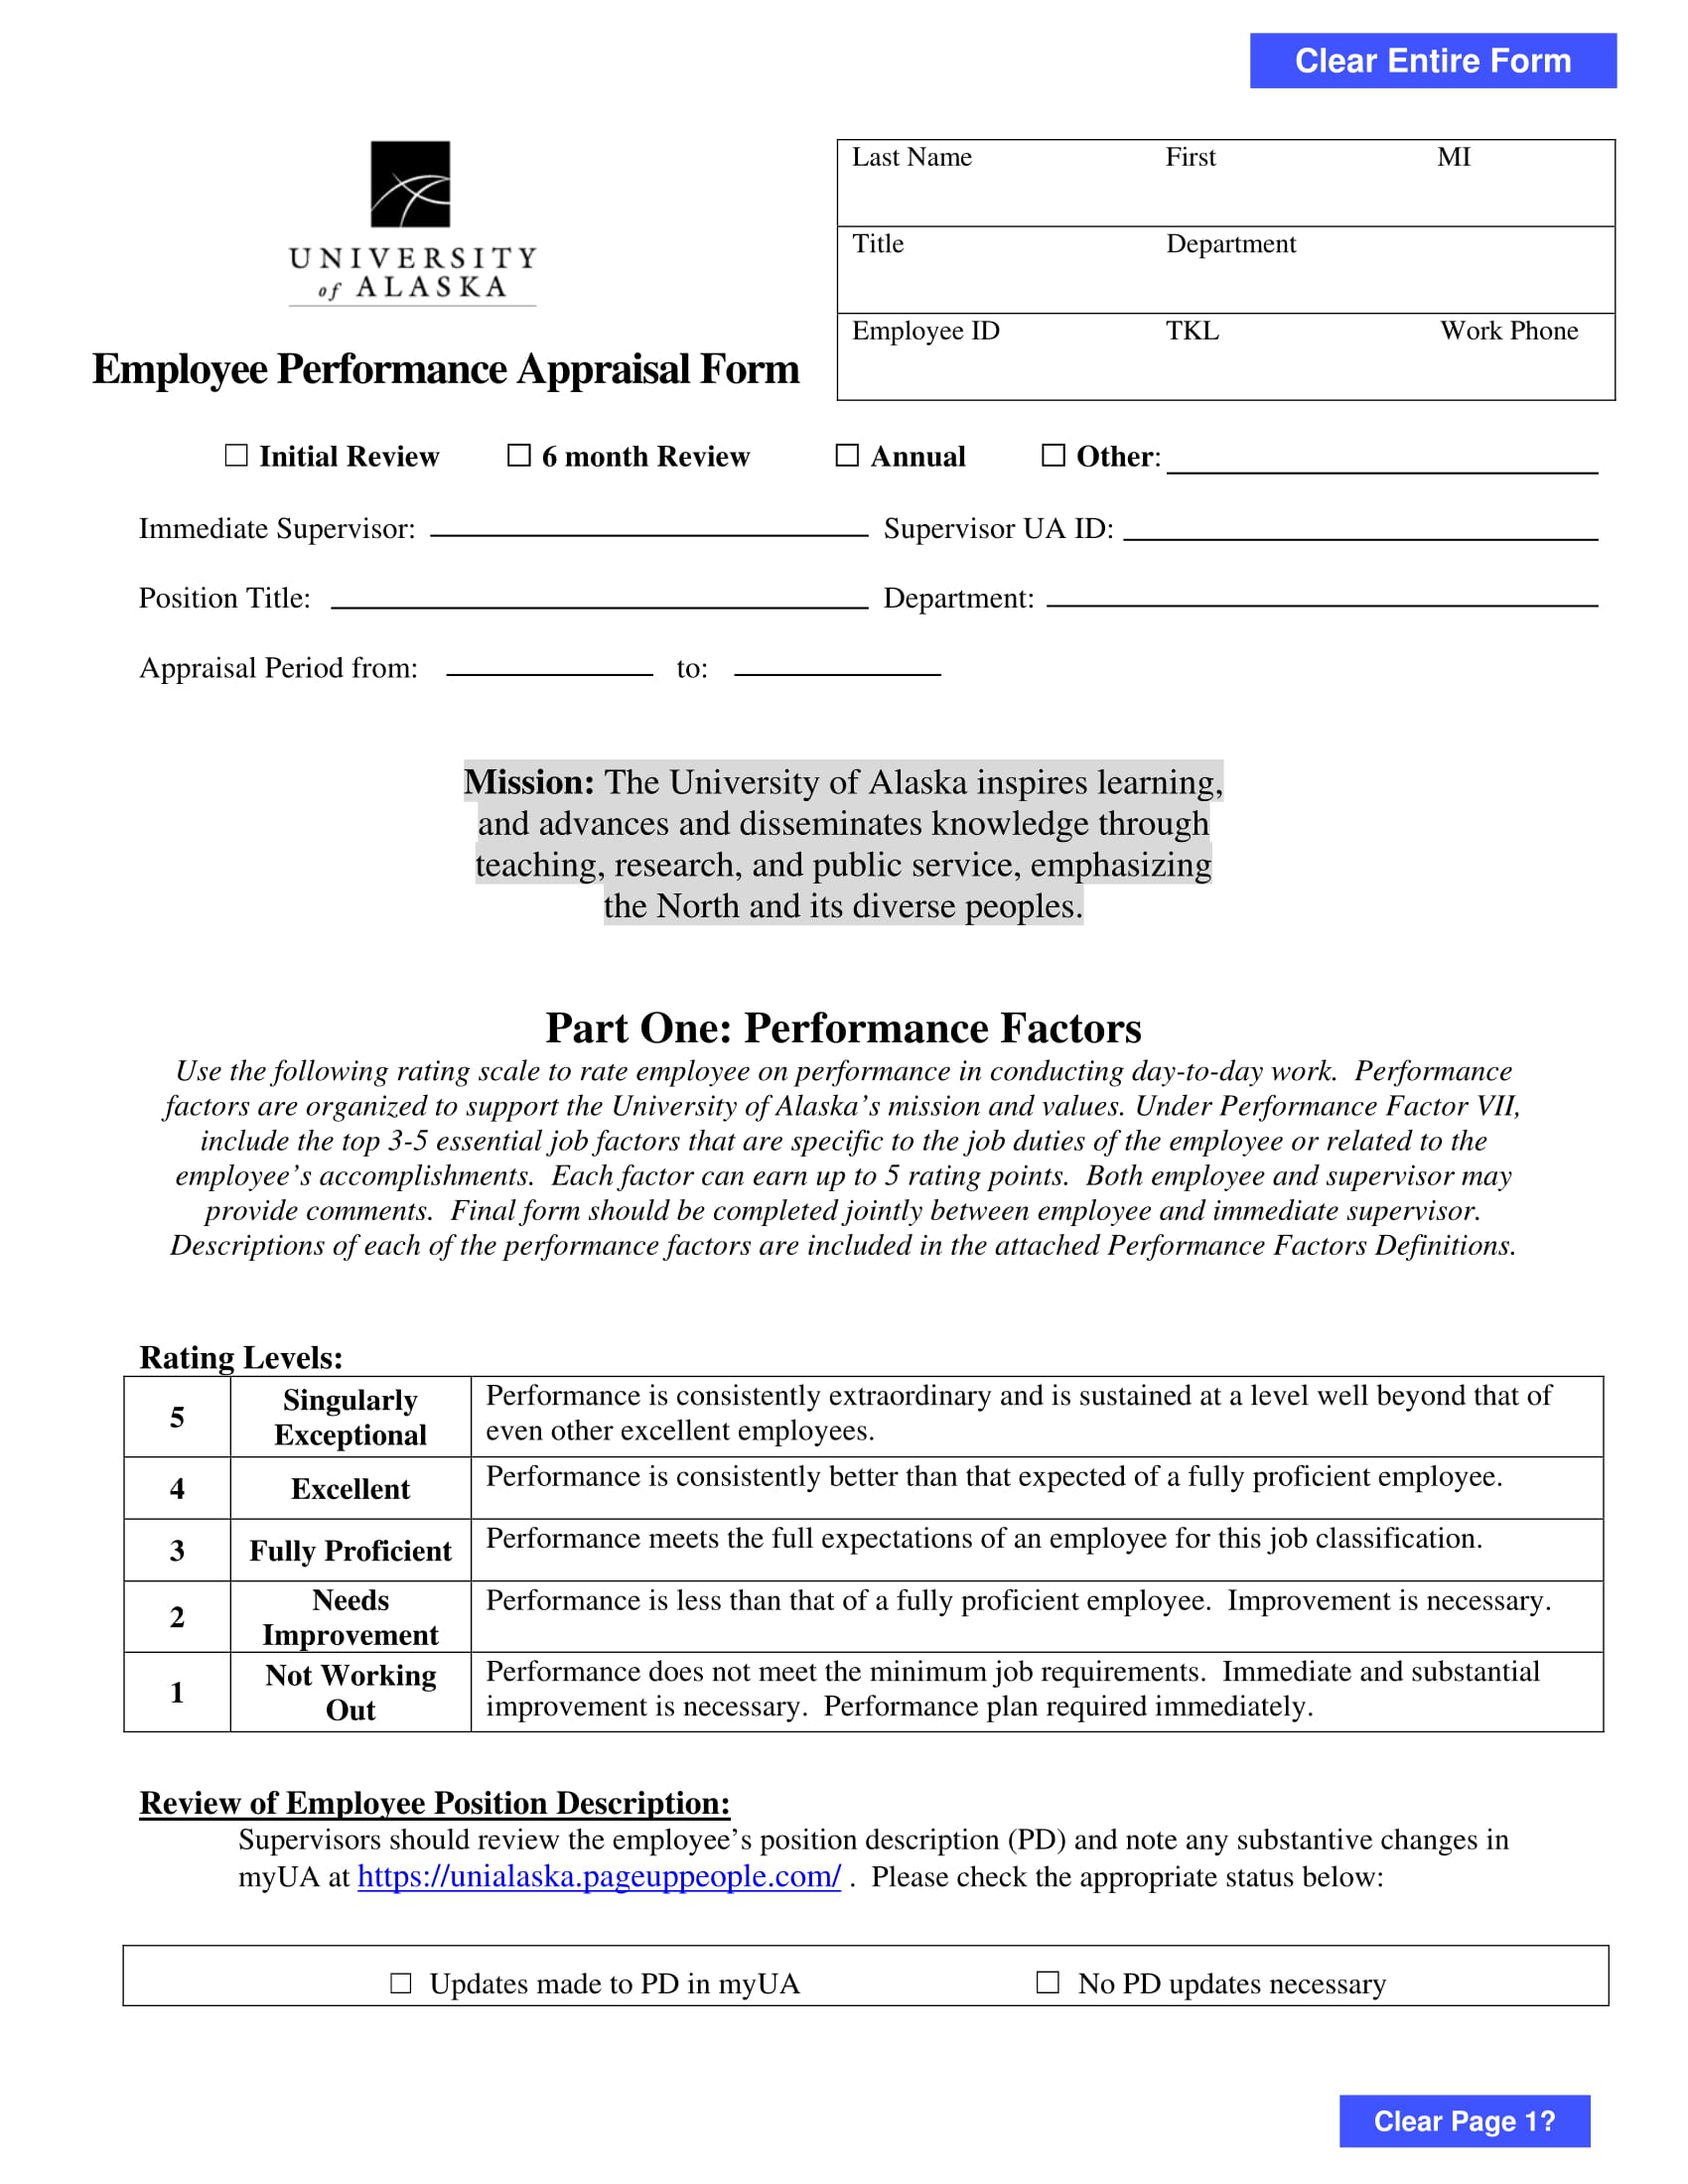 employee performance appraisal form 1